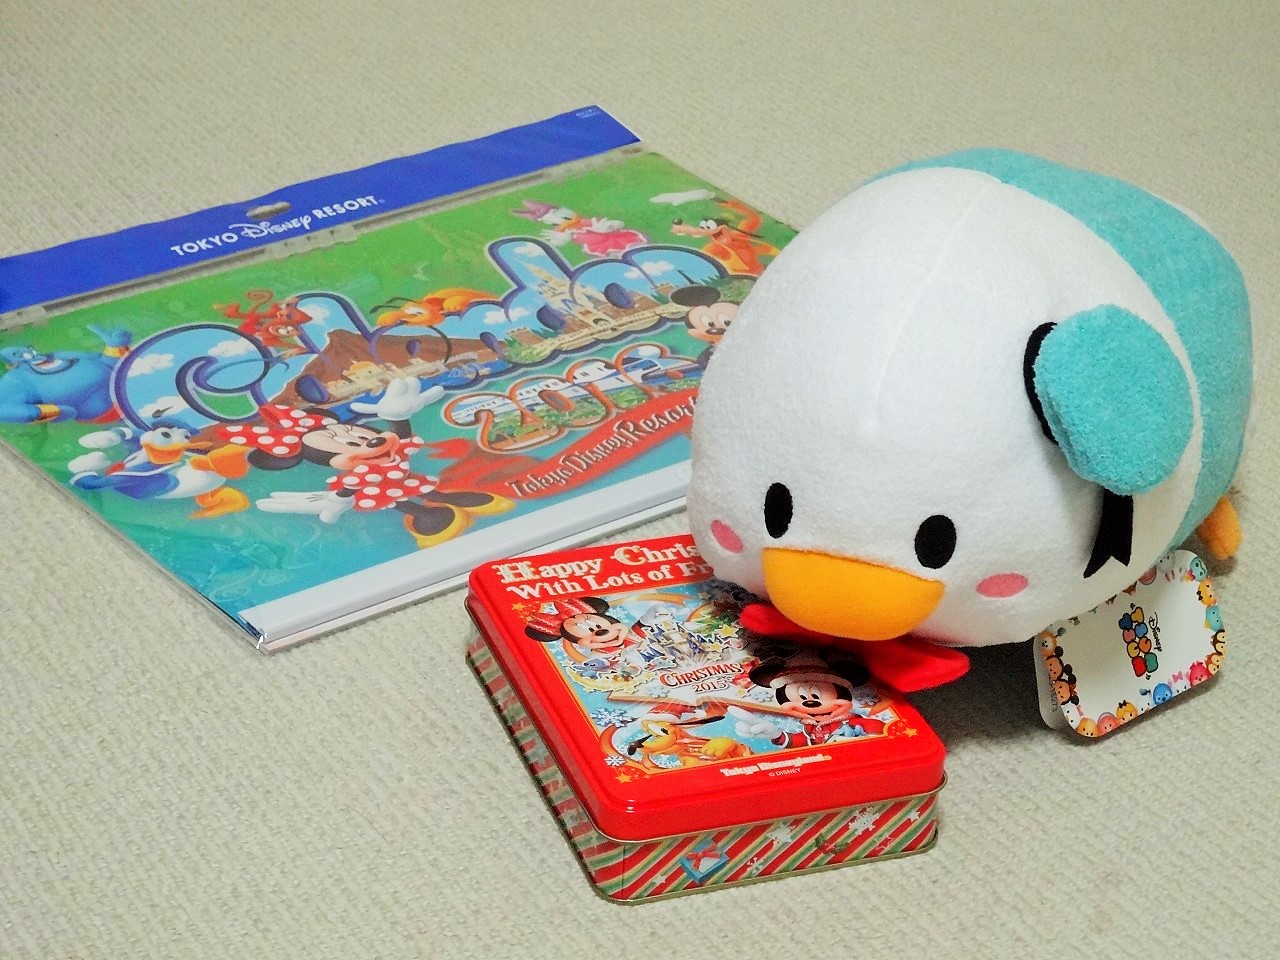 Disney S Christmas 15 東京ディズニーリゾート 千葉県 の旅行記 ブログ By くらげさん フォートラベル